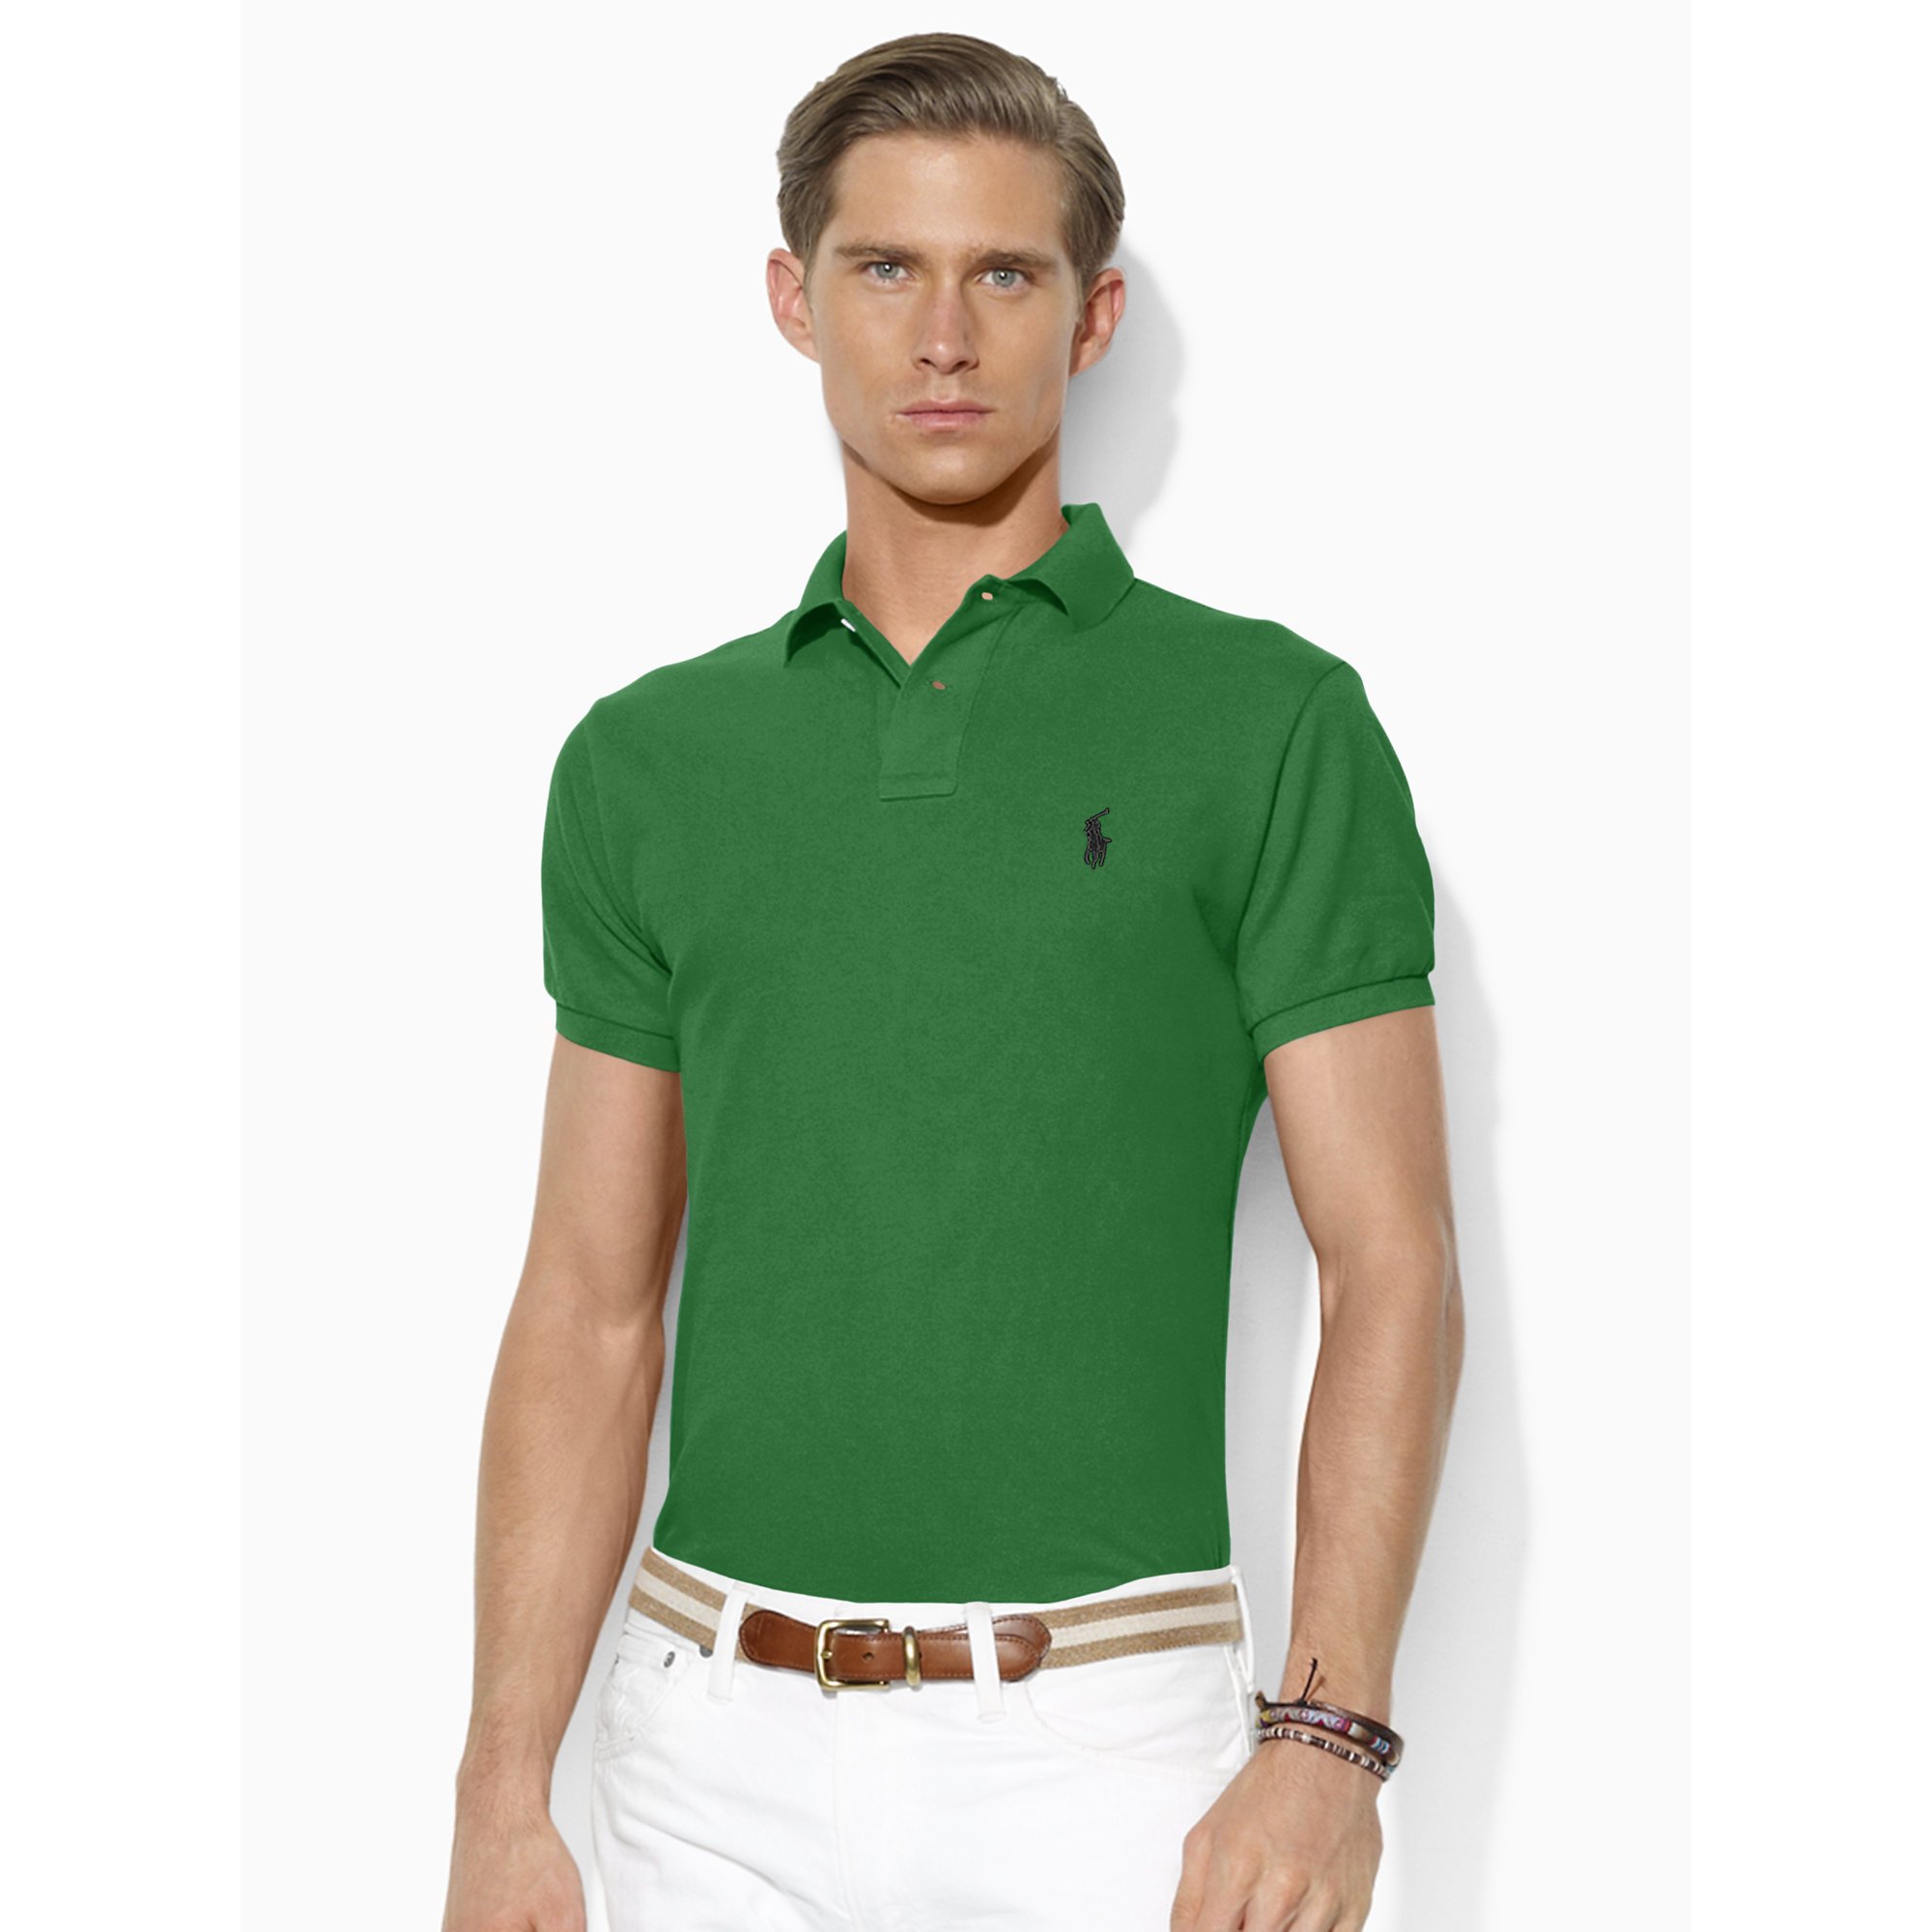 Lyst - Ralph Lauren Custom-Fit Polo Shirt in Green for Men